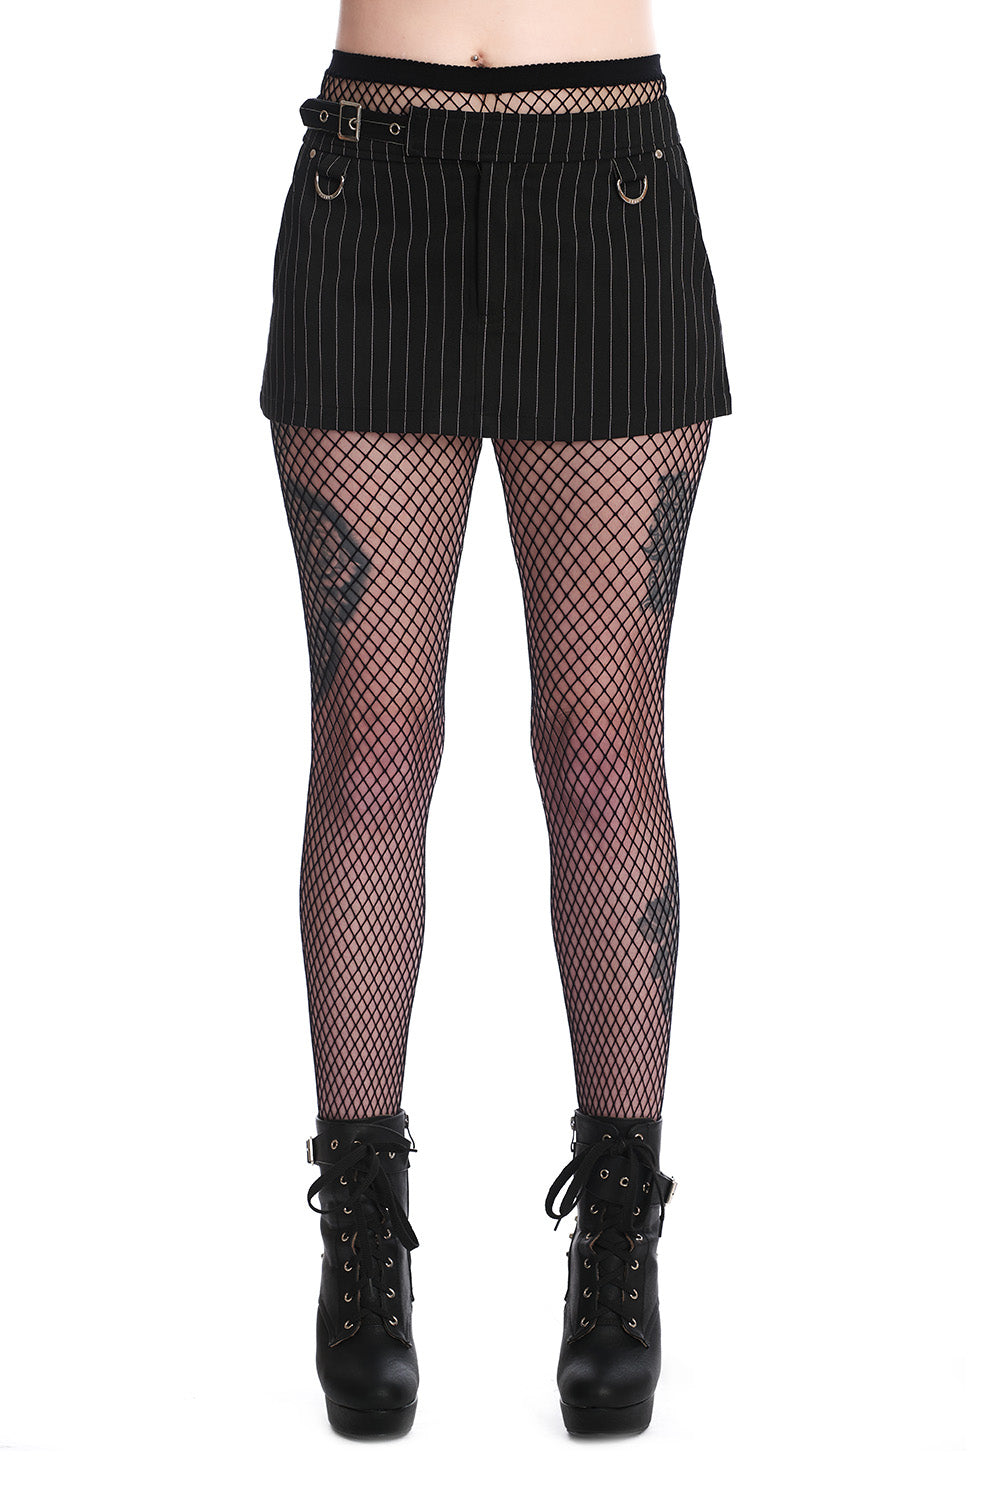 Banned Apparel Darina Pinstripe Mini skirt